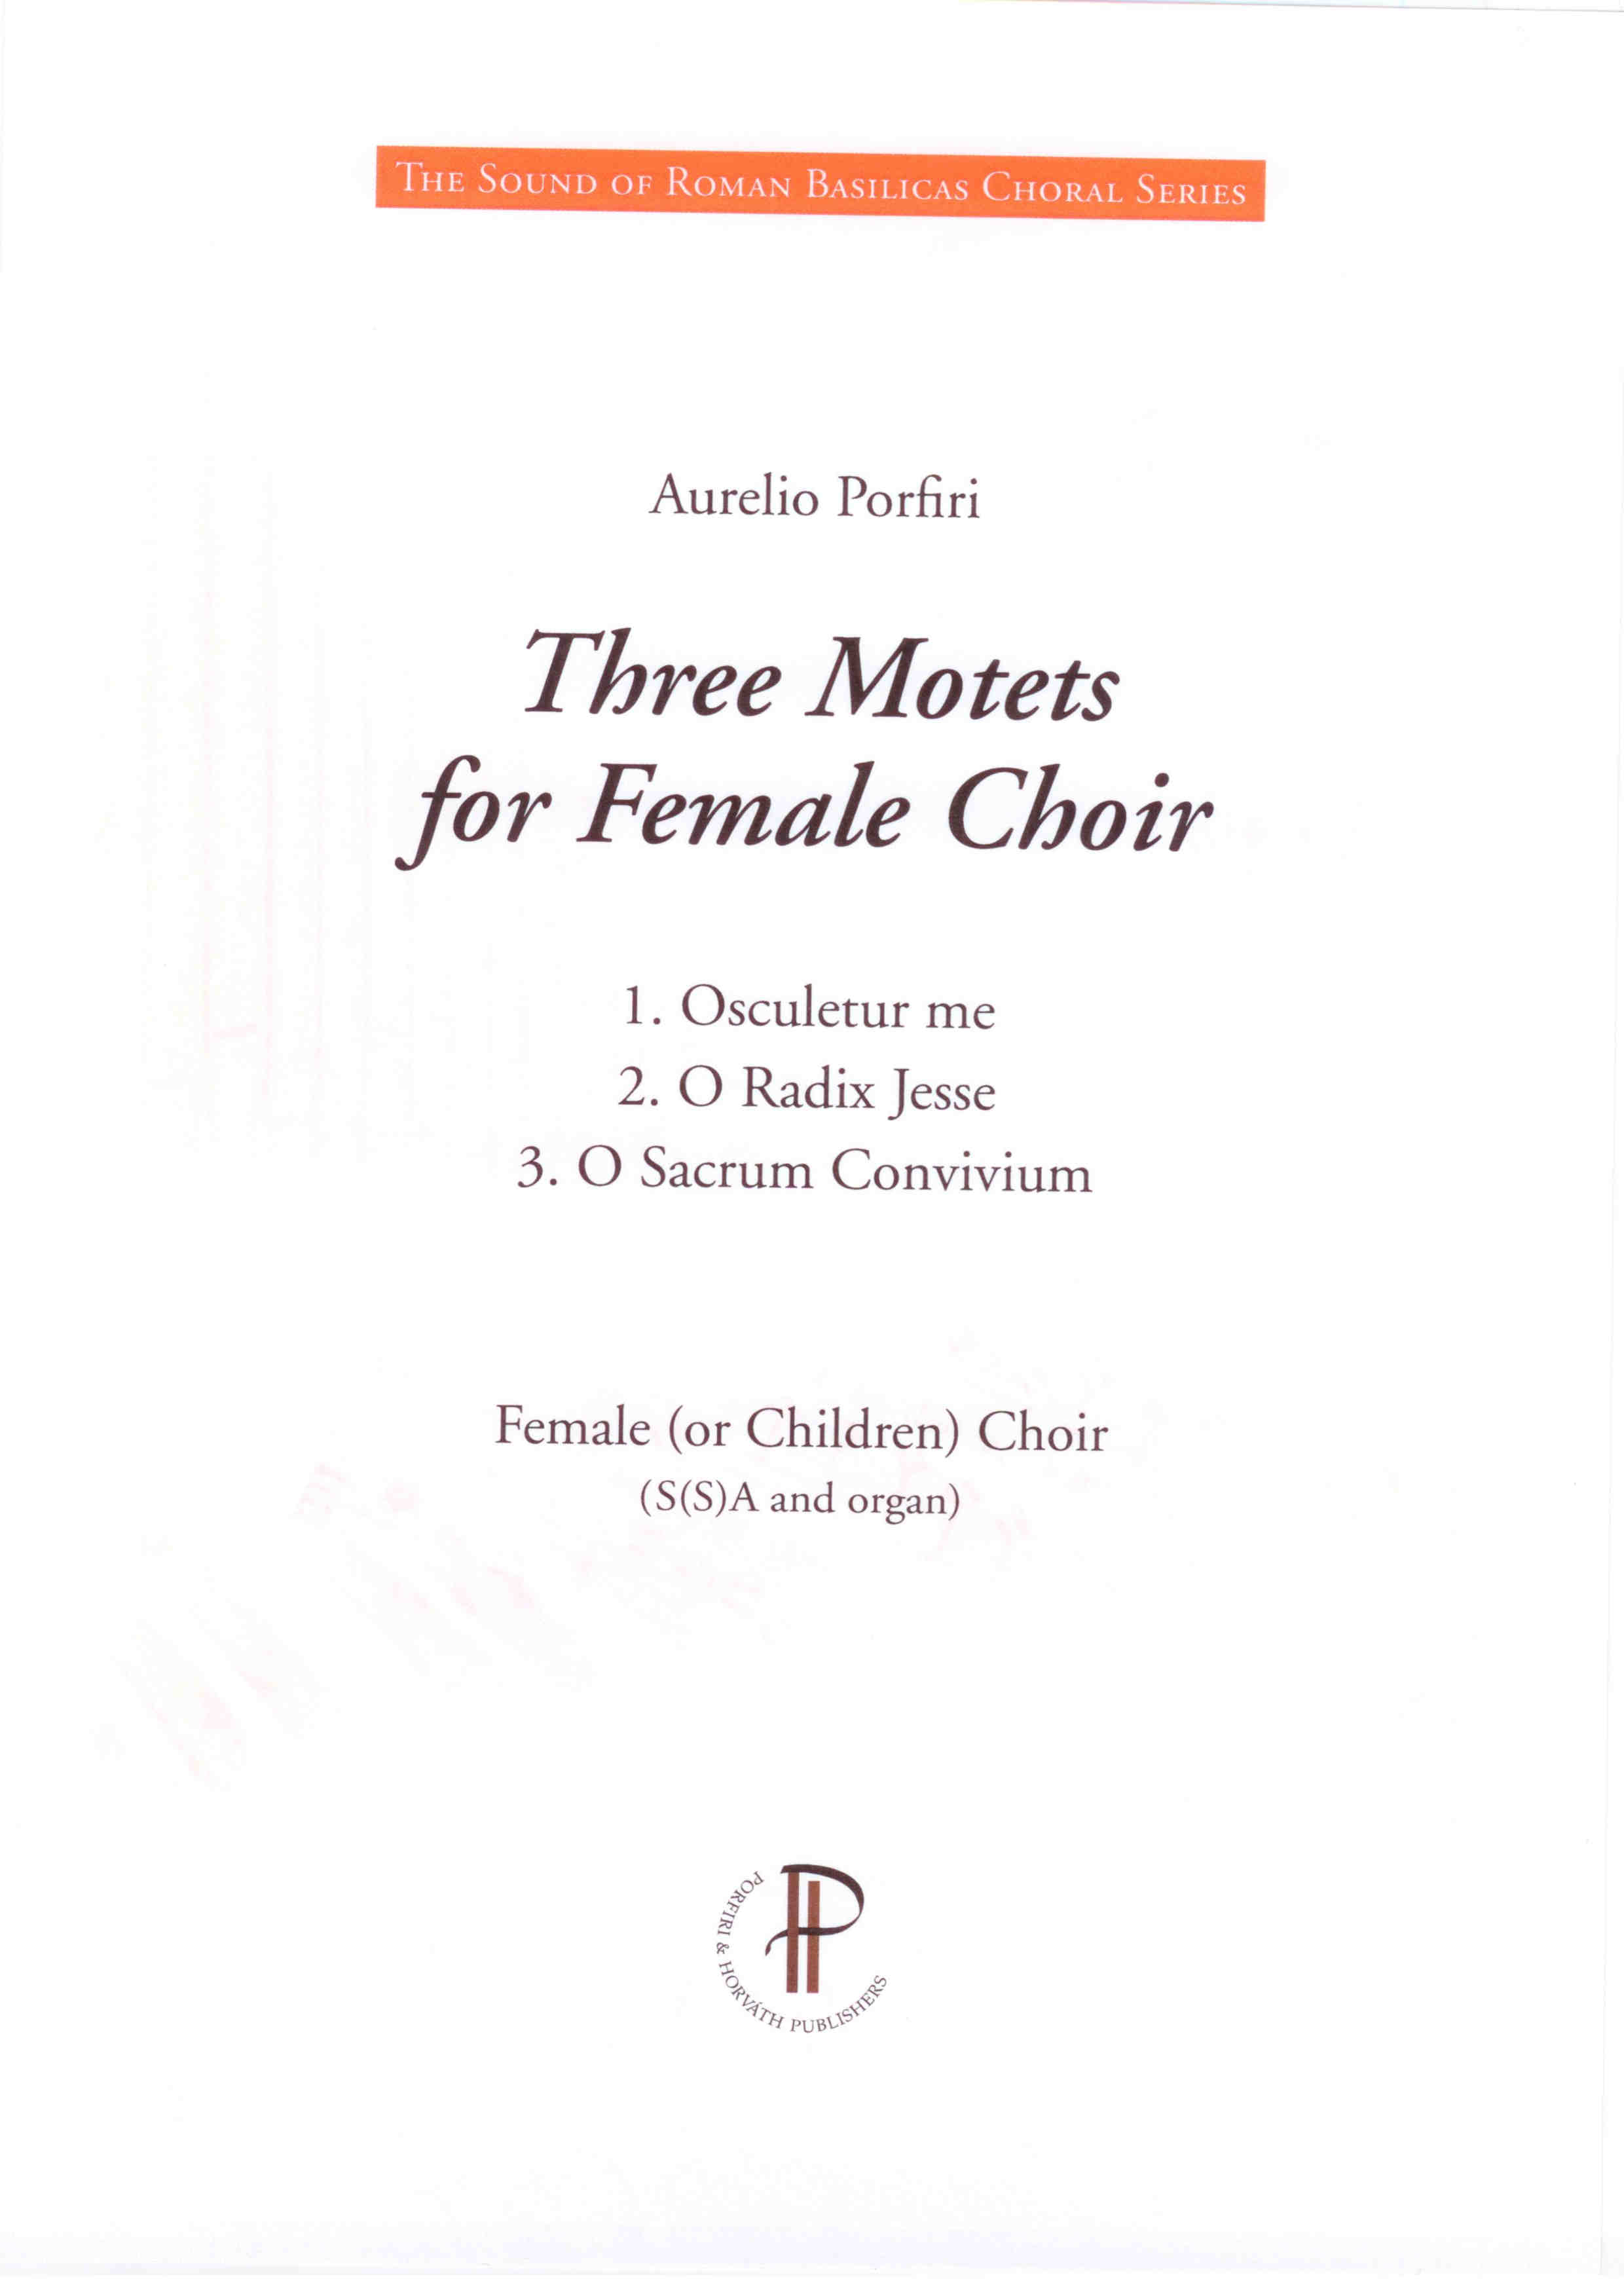 Three Motets for Female Choir - Show sample score